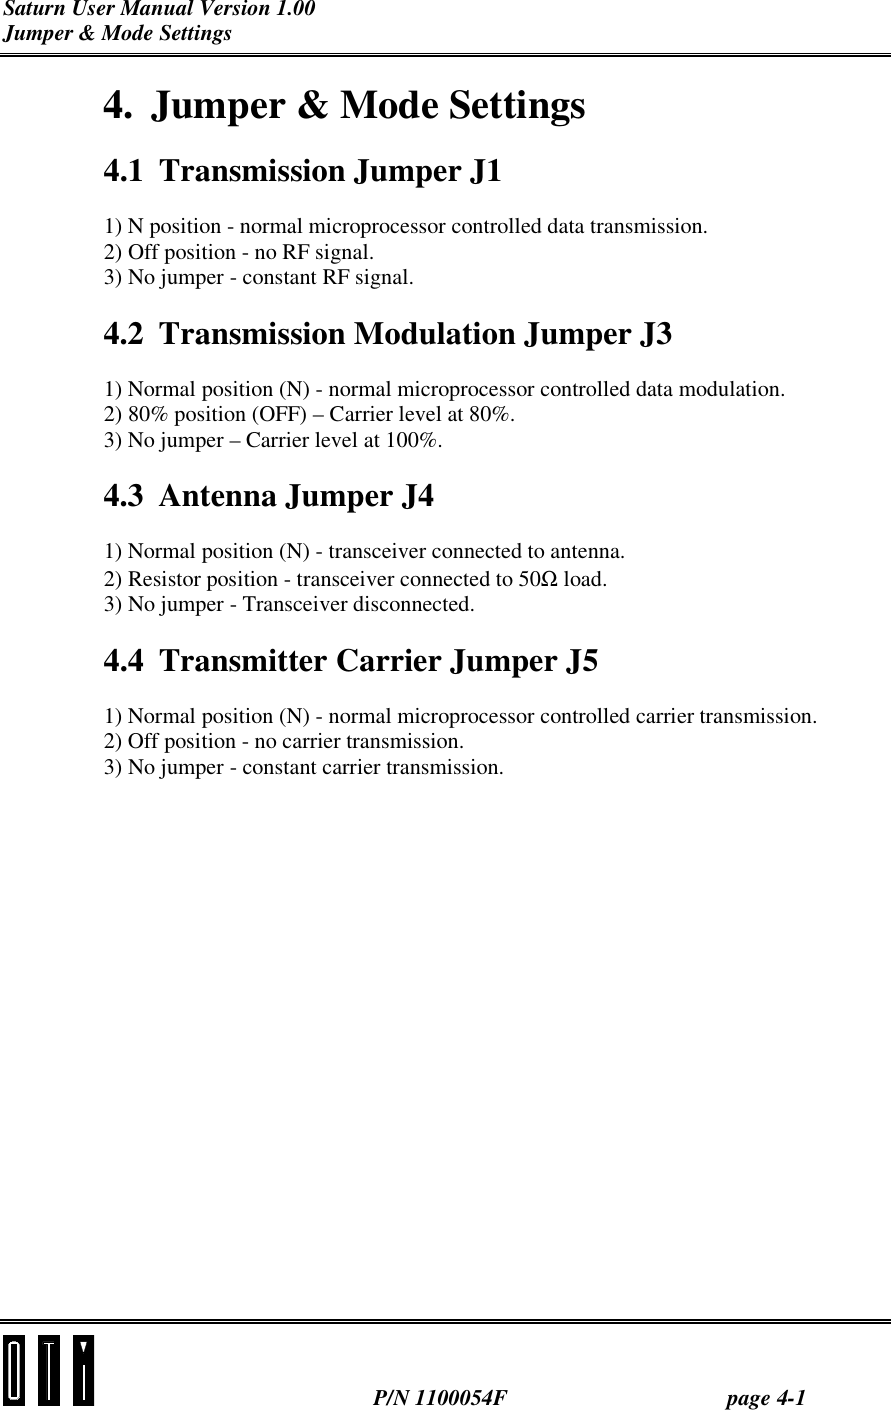 Saturn User Manual Version 1.00 Jumper &amp; Mode Settings  P/N 1100054F page 4-1 4.  Jumper &amp; Mode Settings 4.1  Transmission Jumper J1 1) N position - normal microprocessor controlled data transmission. 2) Off position - no RF signal. 3) No jumper - constant RF signal. 4.2  Transmission Modulation Jumper J3 1) Normal position (N) - normal microprocessor controlled data modulation. 2) 80% position (OFF) – Carrier level at 80%. 3) No jumper – Carrier level at 100%. 4.3 Antenna Jumper J4 1) Normal position (N) - transceiver connected to antenna. 2) Resistor position - transceiver connected to 50Ω load. 3) No jumper - Transceiver disconnected.  4.4  Transmitter Carrier Jumper J5 1) Normal position (N) - normal microprocessor controlled carrier transmission. 2) Off position - no carrier transmission. 3) No jumper - constant carrier transmission. 